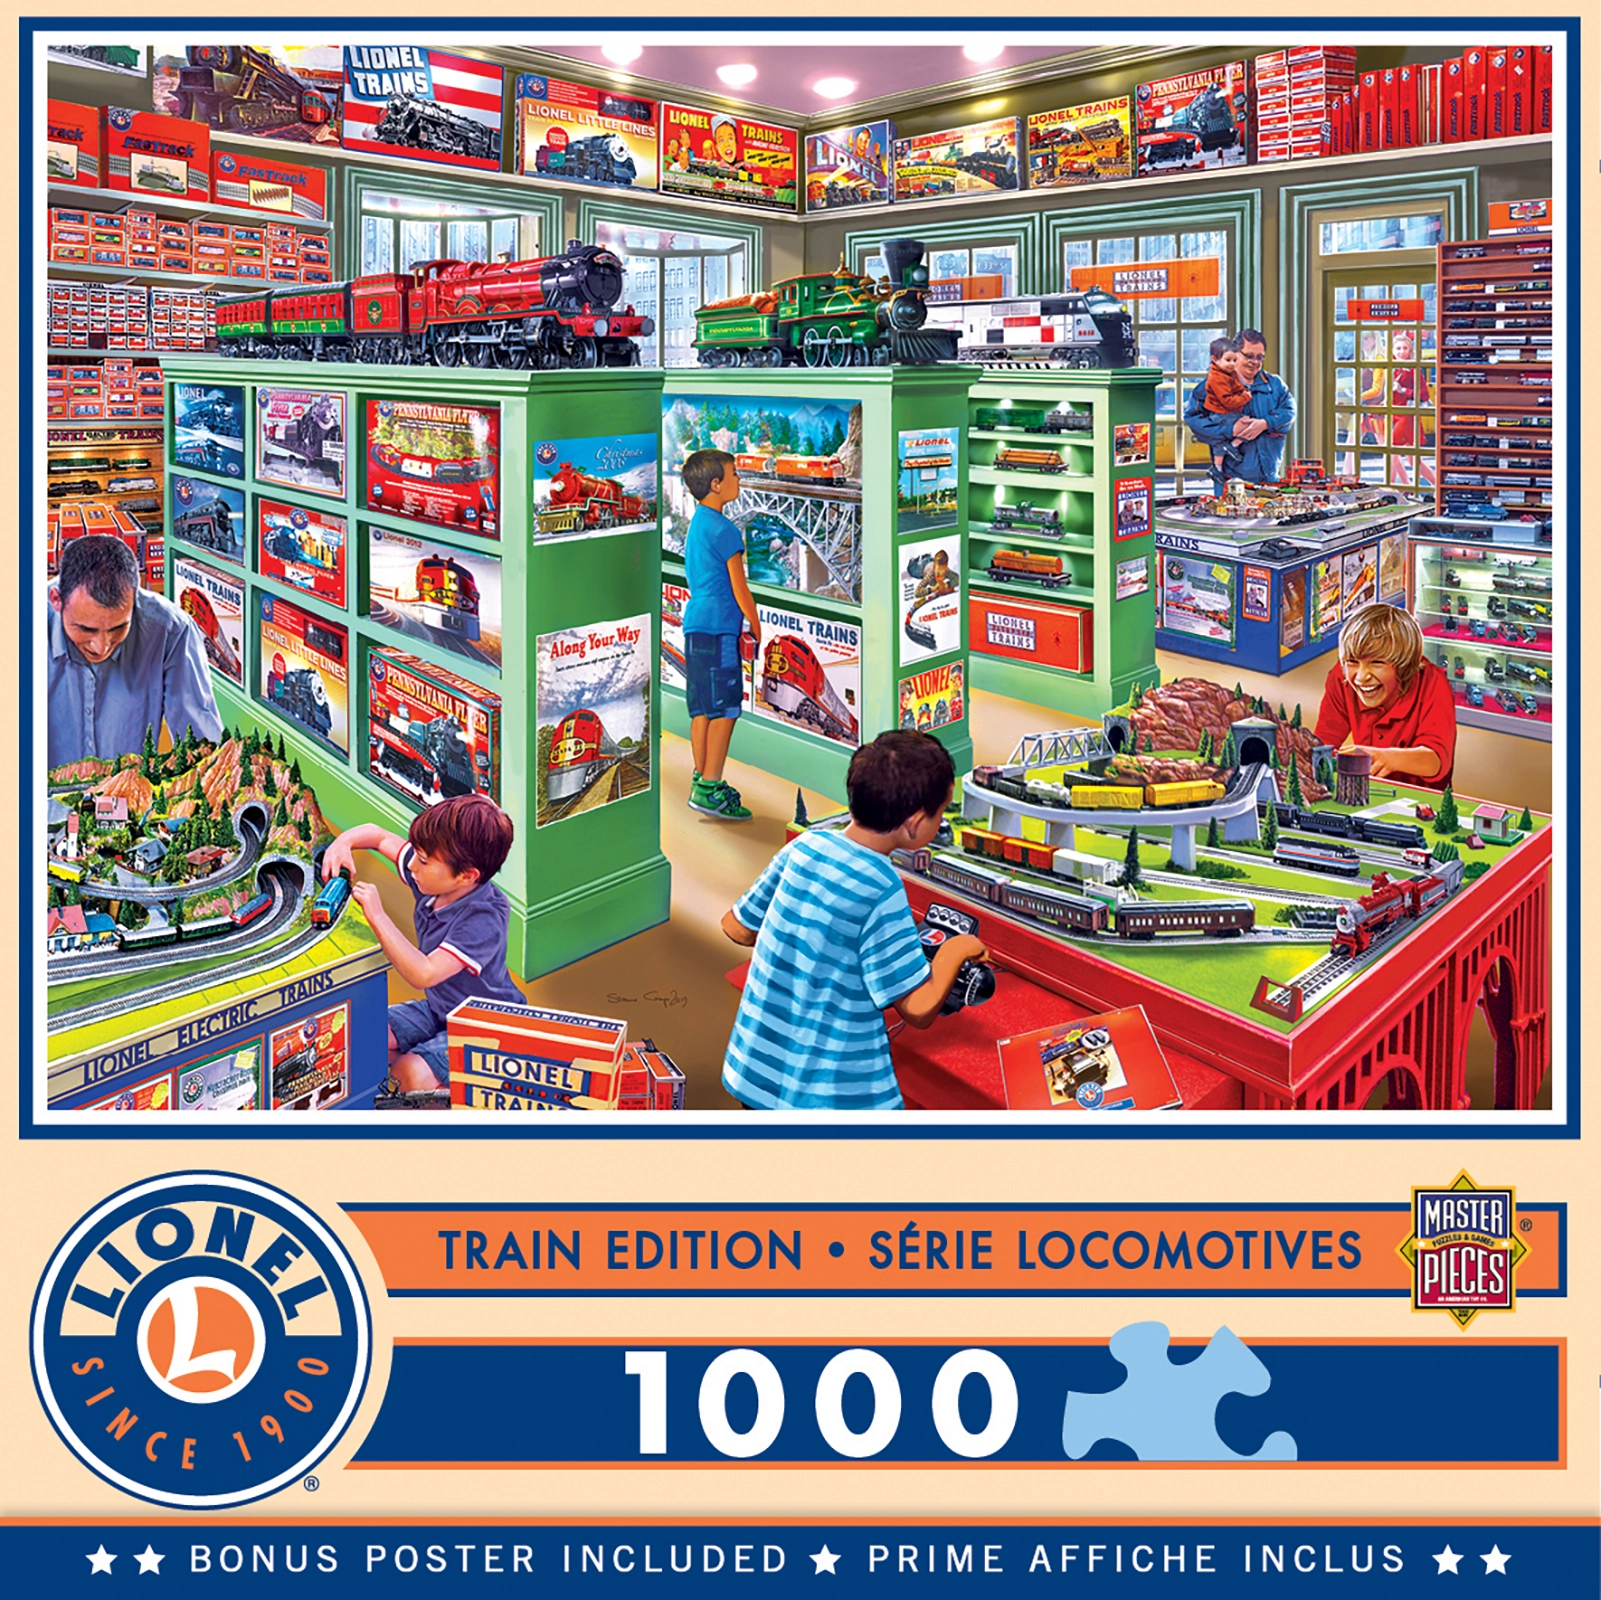 MasterPieces-Lionel - The Lionel Store - 1000 Piece Puzzle-72030-Legacy Toys